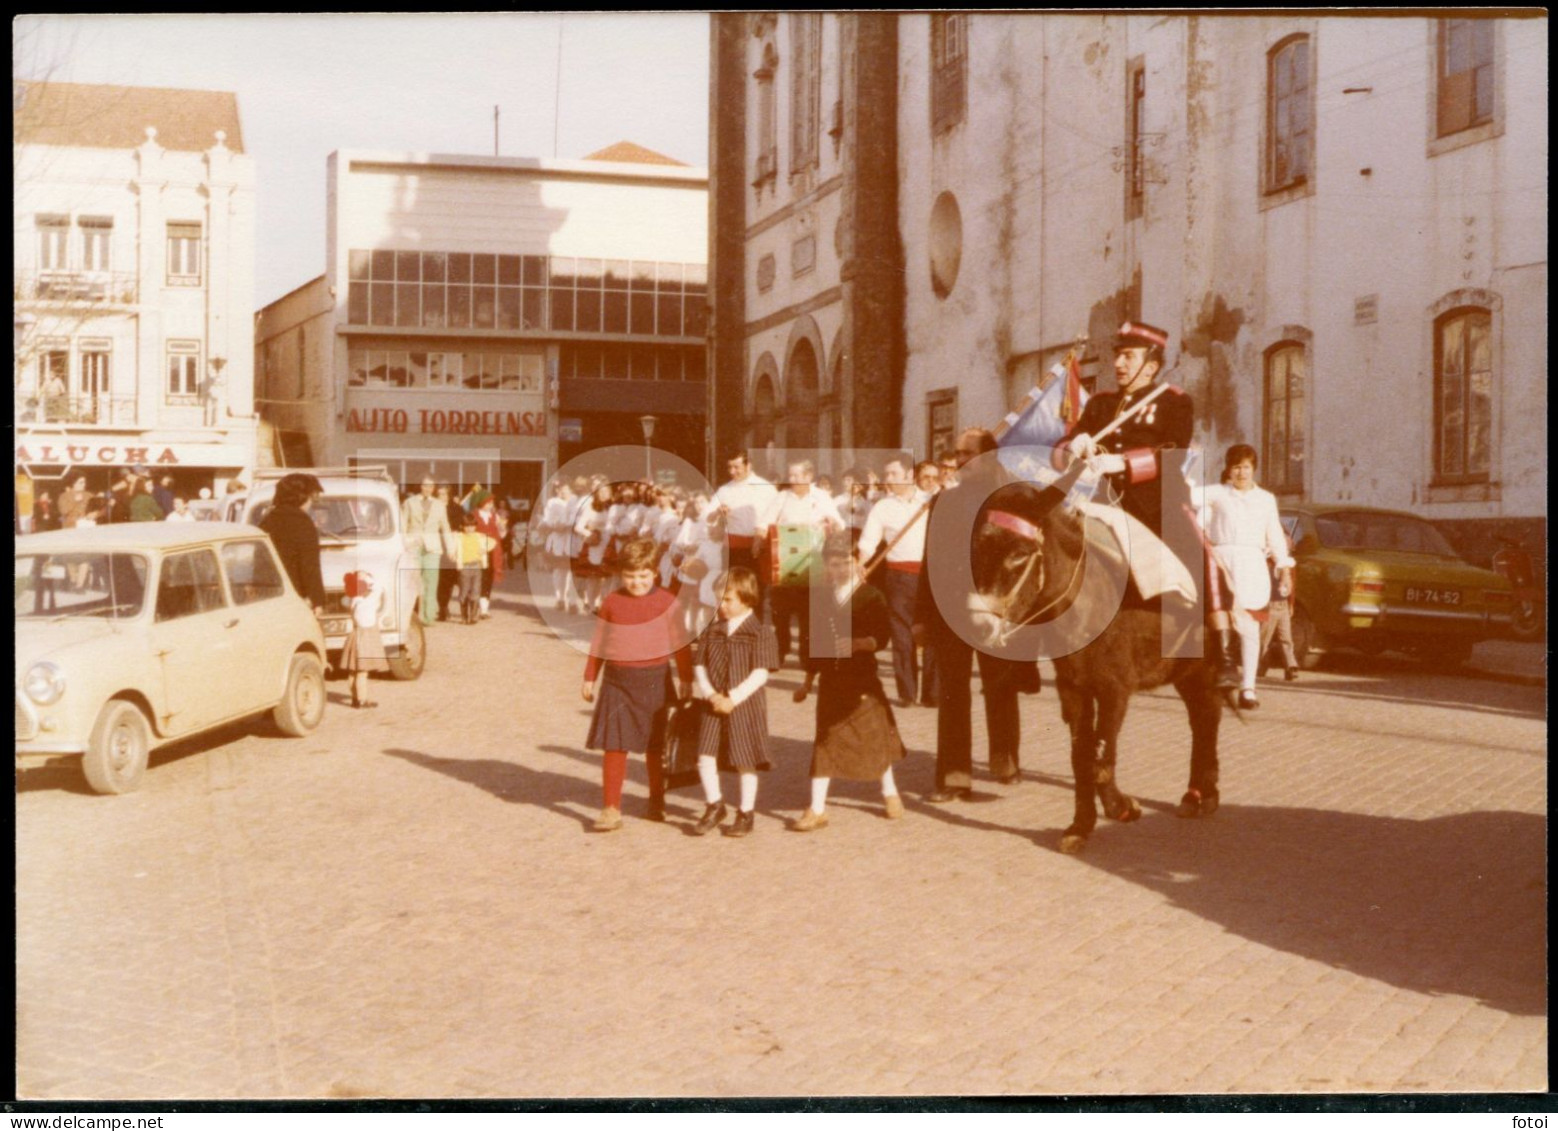 5 PHOTOS SET 1979 REAL AMATEUR FOTO PHOTO CARNIVAL CARNAVAL TORRES VEDRAS PORTUGAL AT344 - Africa